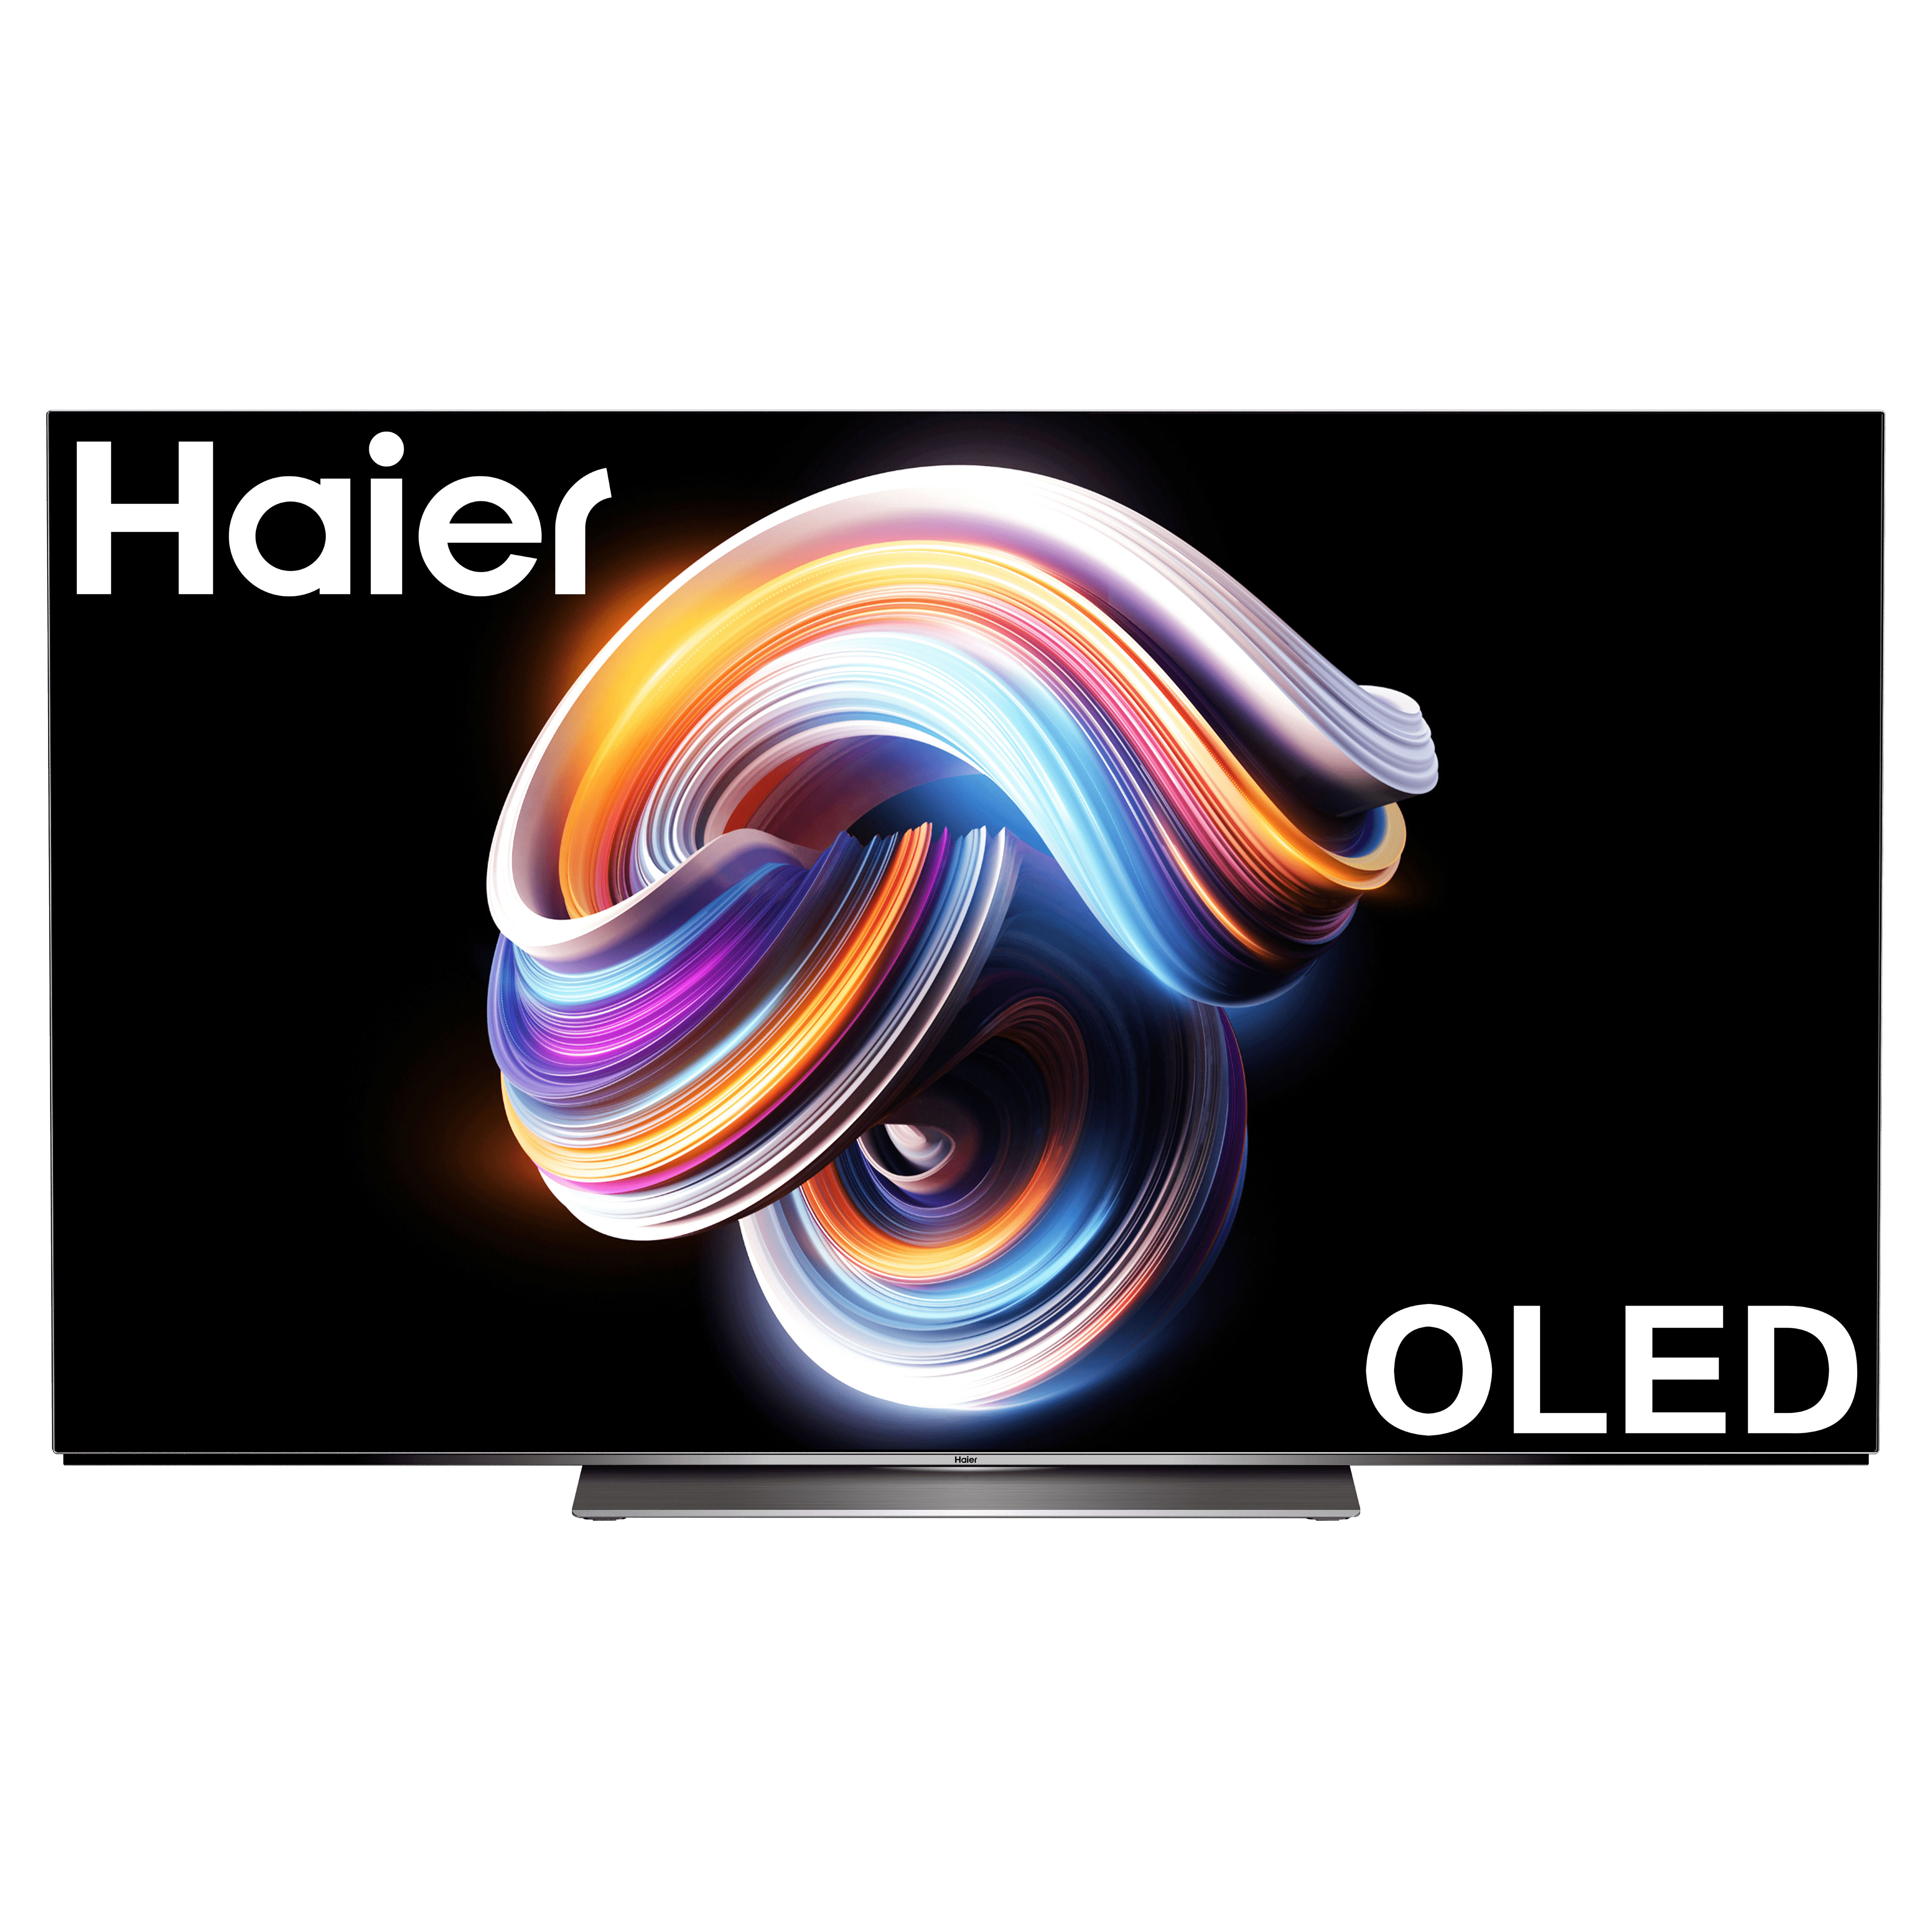 Haier oled s9 ultra купить. OLED Haier h65s9ug Pro. Телевизор Haier h65s9ug Pro. Телевизор OLED Haier h65s9ug Pro. 65" Haier h65s9ug Pro.